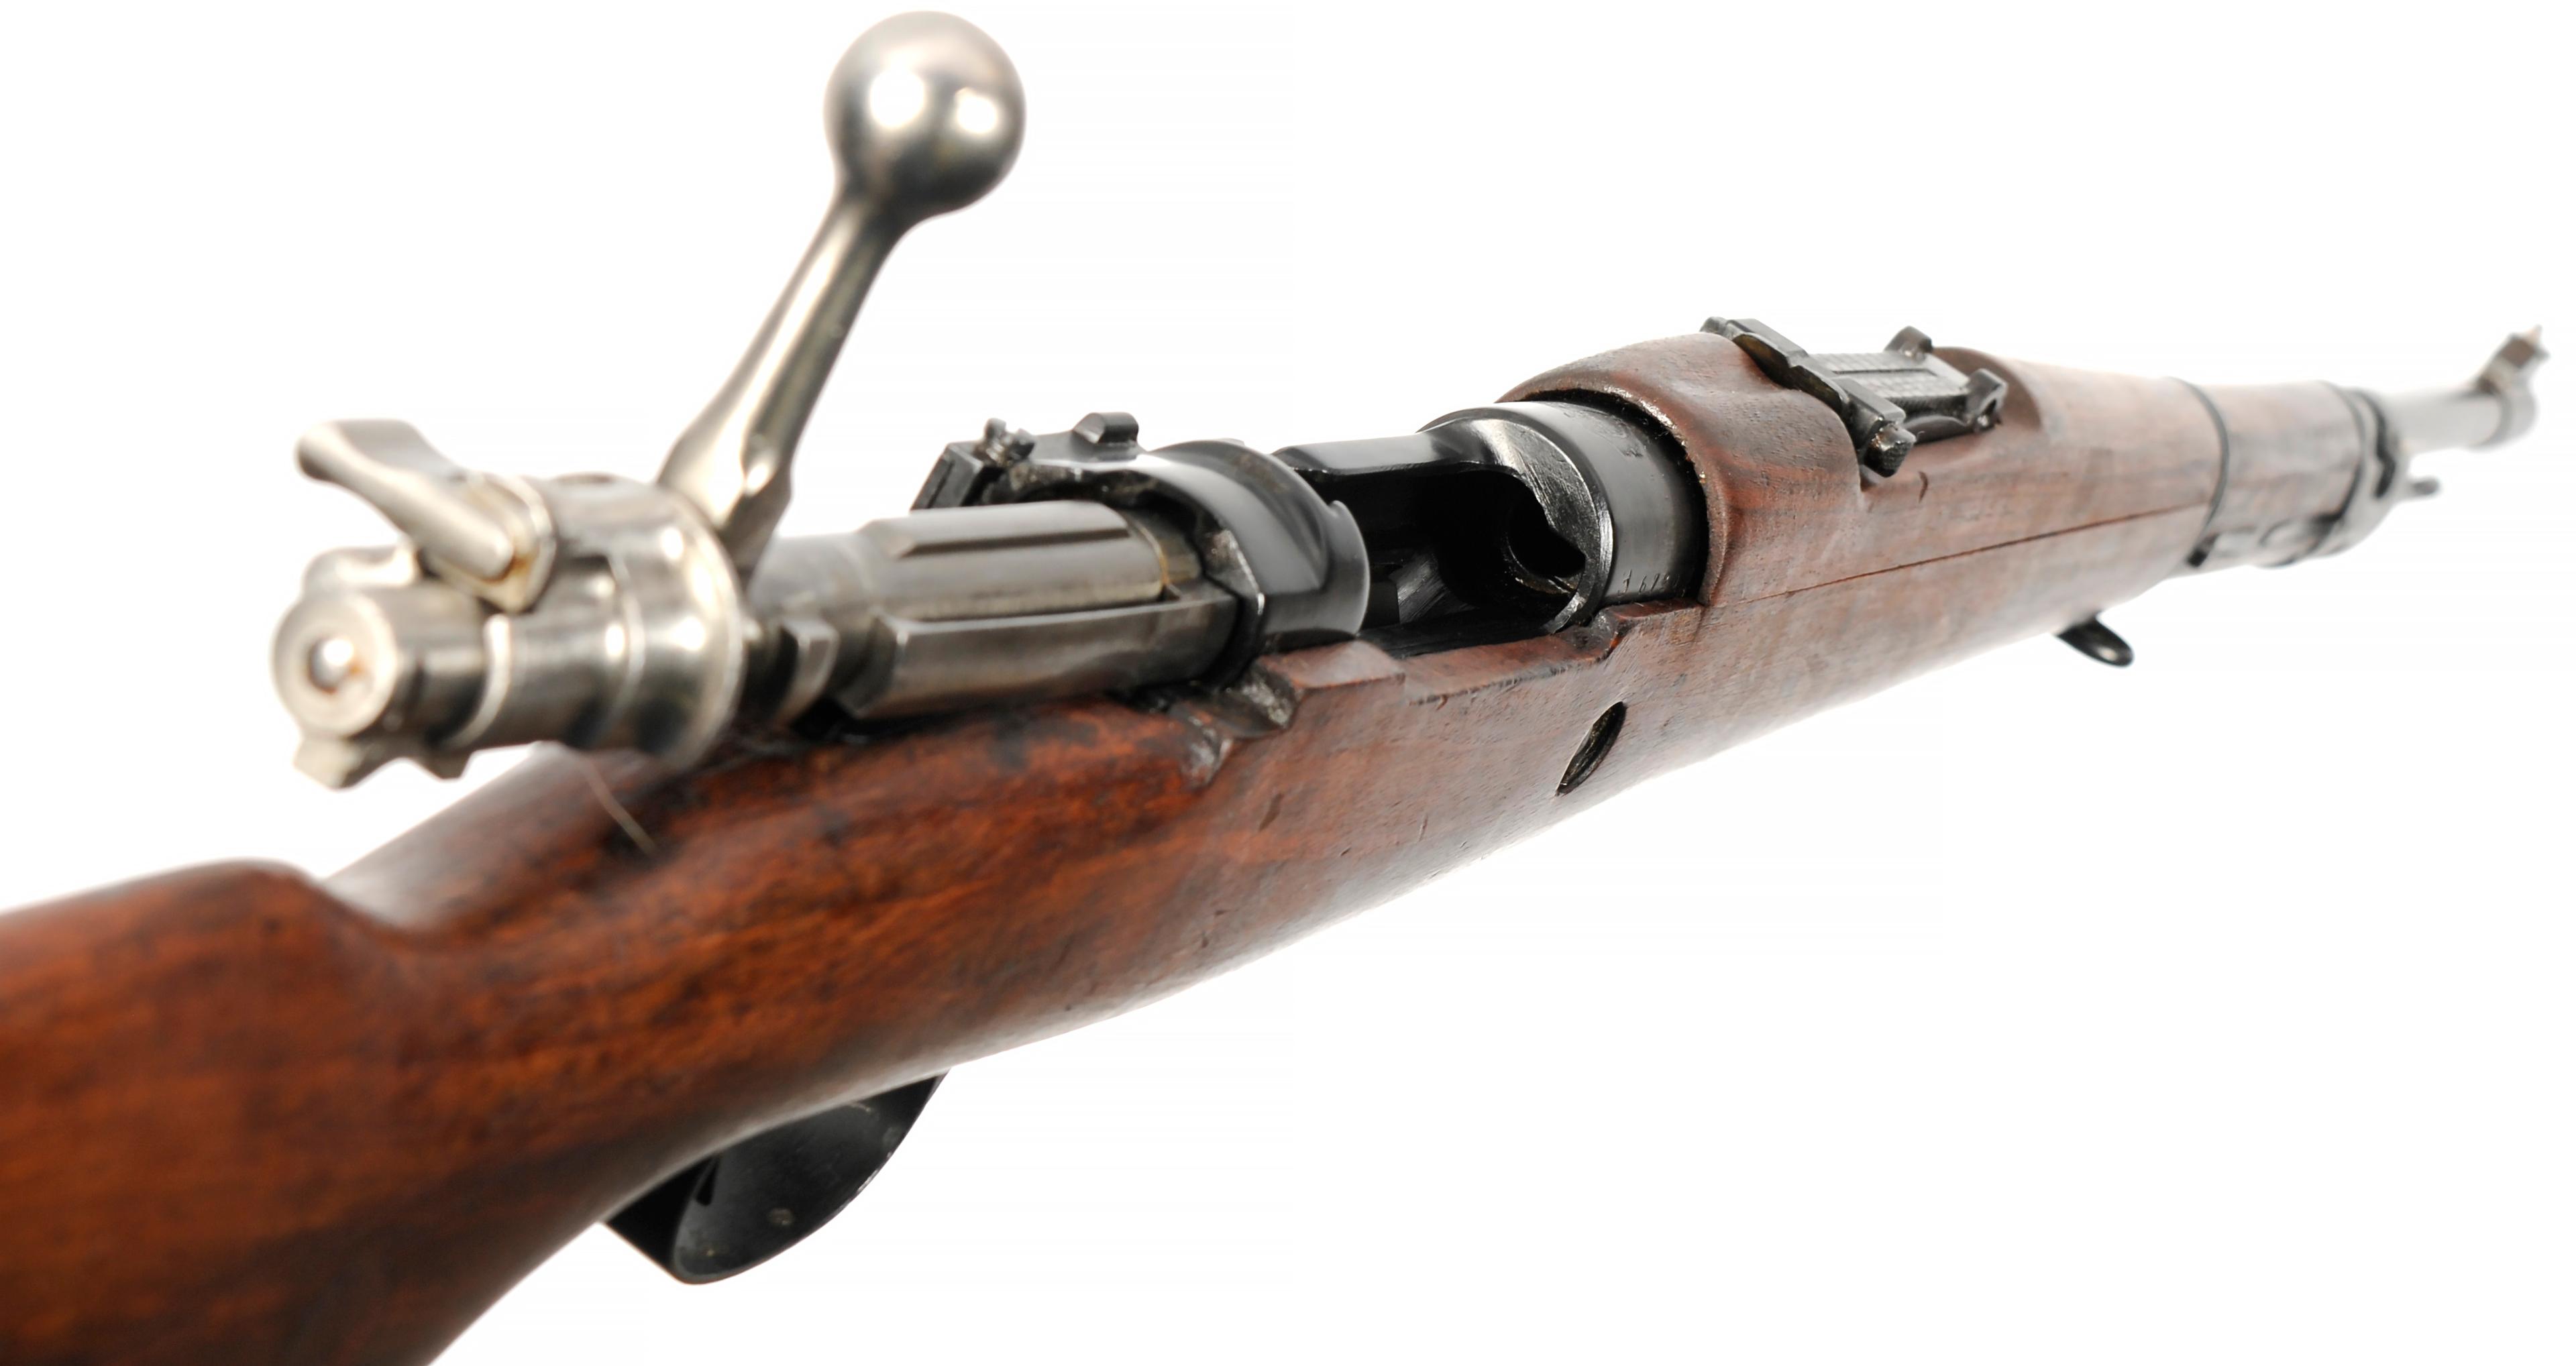 Yugoslavian Military Model 24/47 8mm Mauser Bolt-Action Rifle - FFL # 36720 (LRX 1)